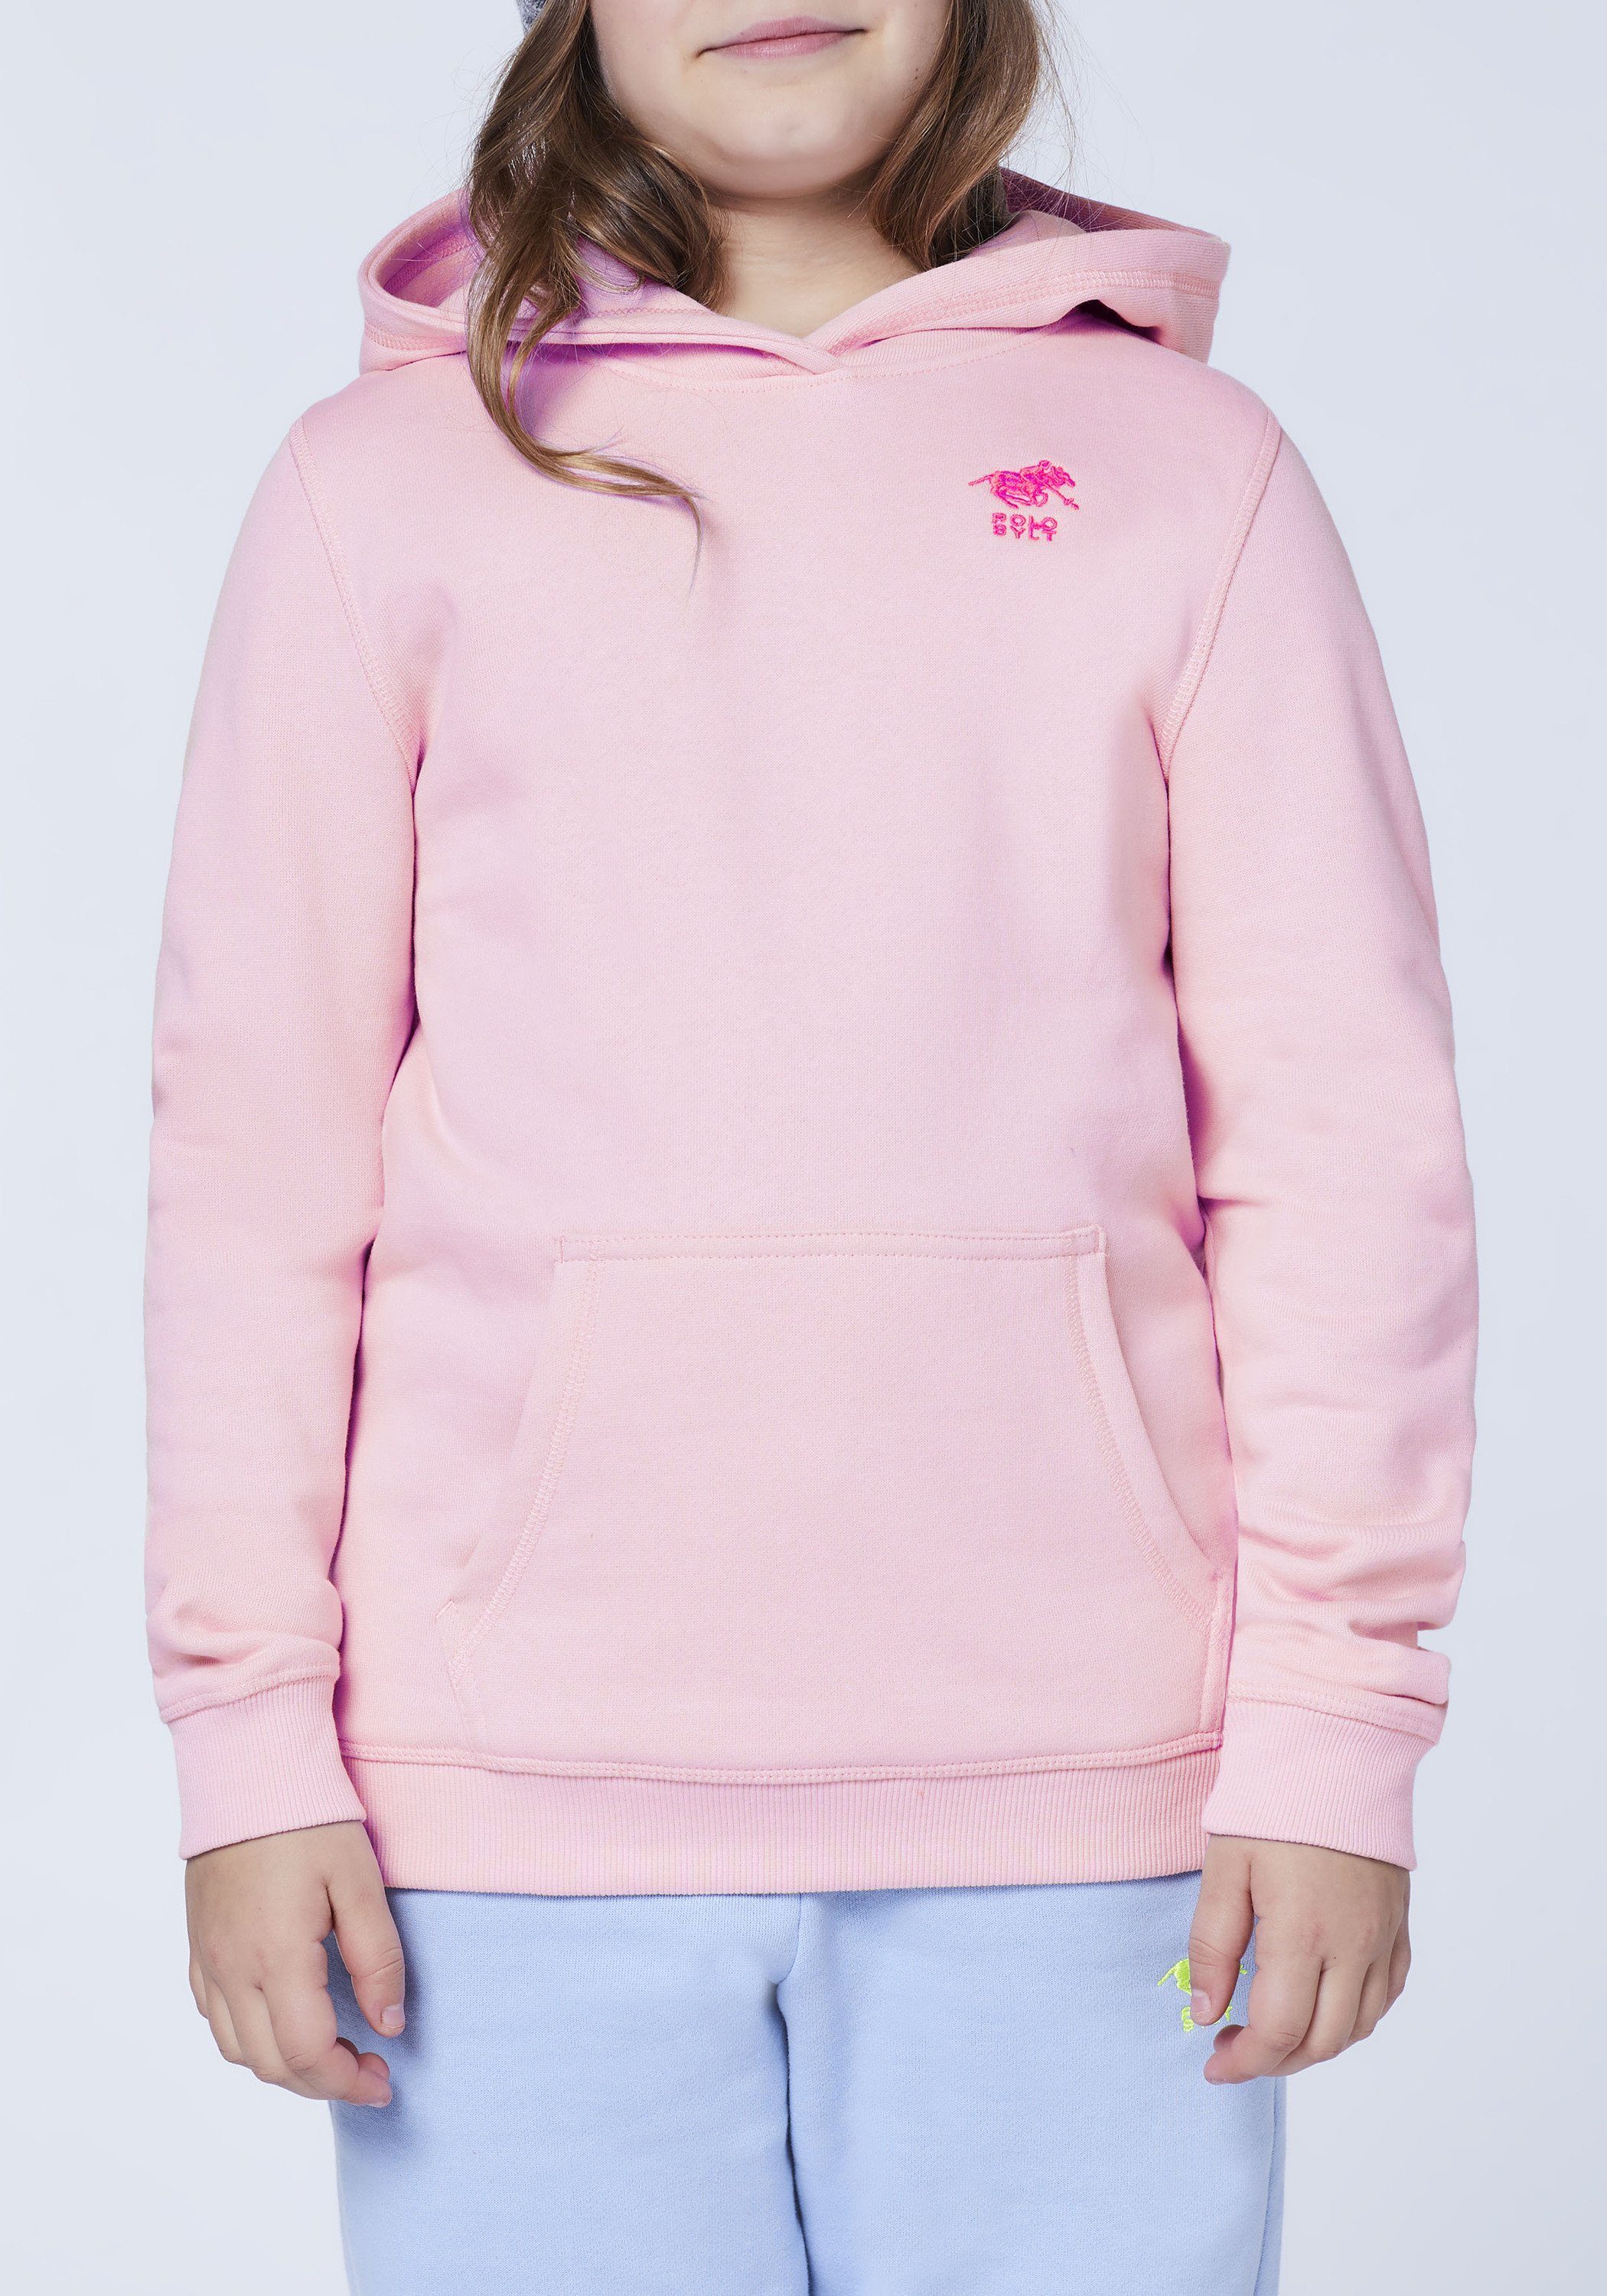 Sylt Lady Polo 13-2806 Pink Label-Stitching mit Sweatshirt